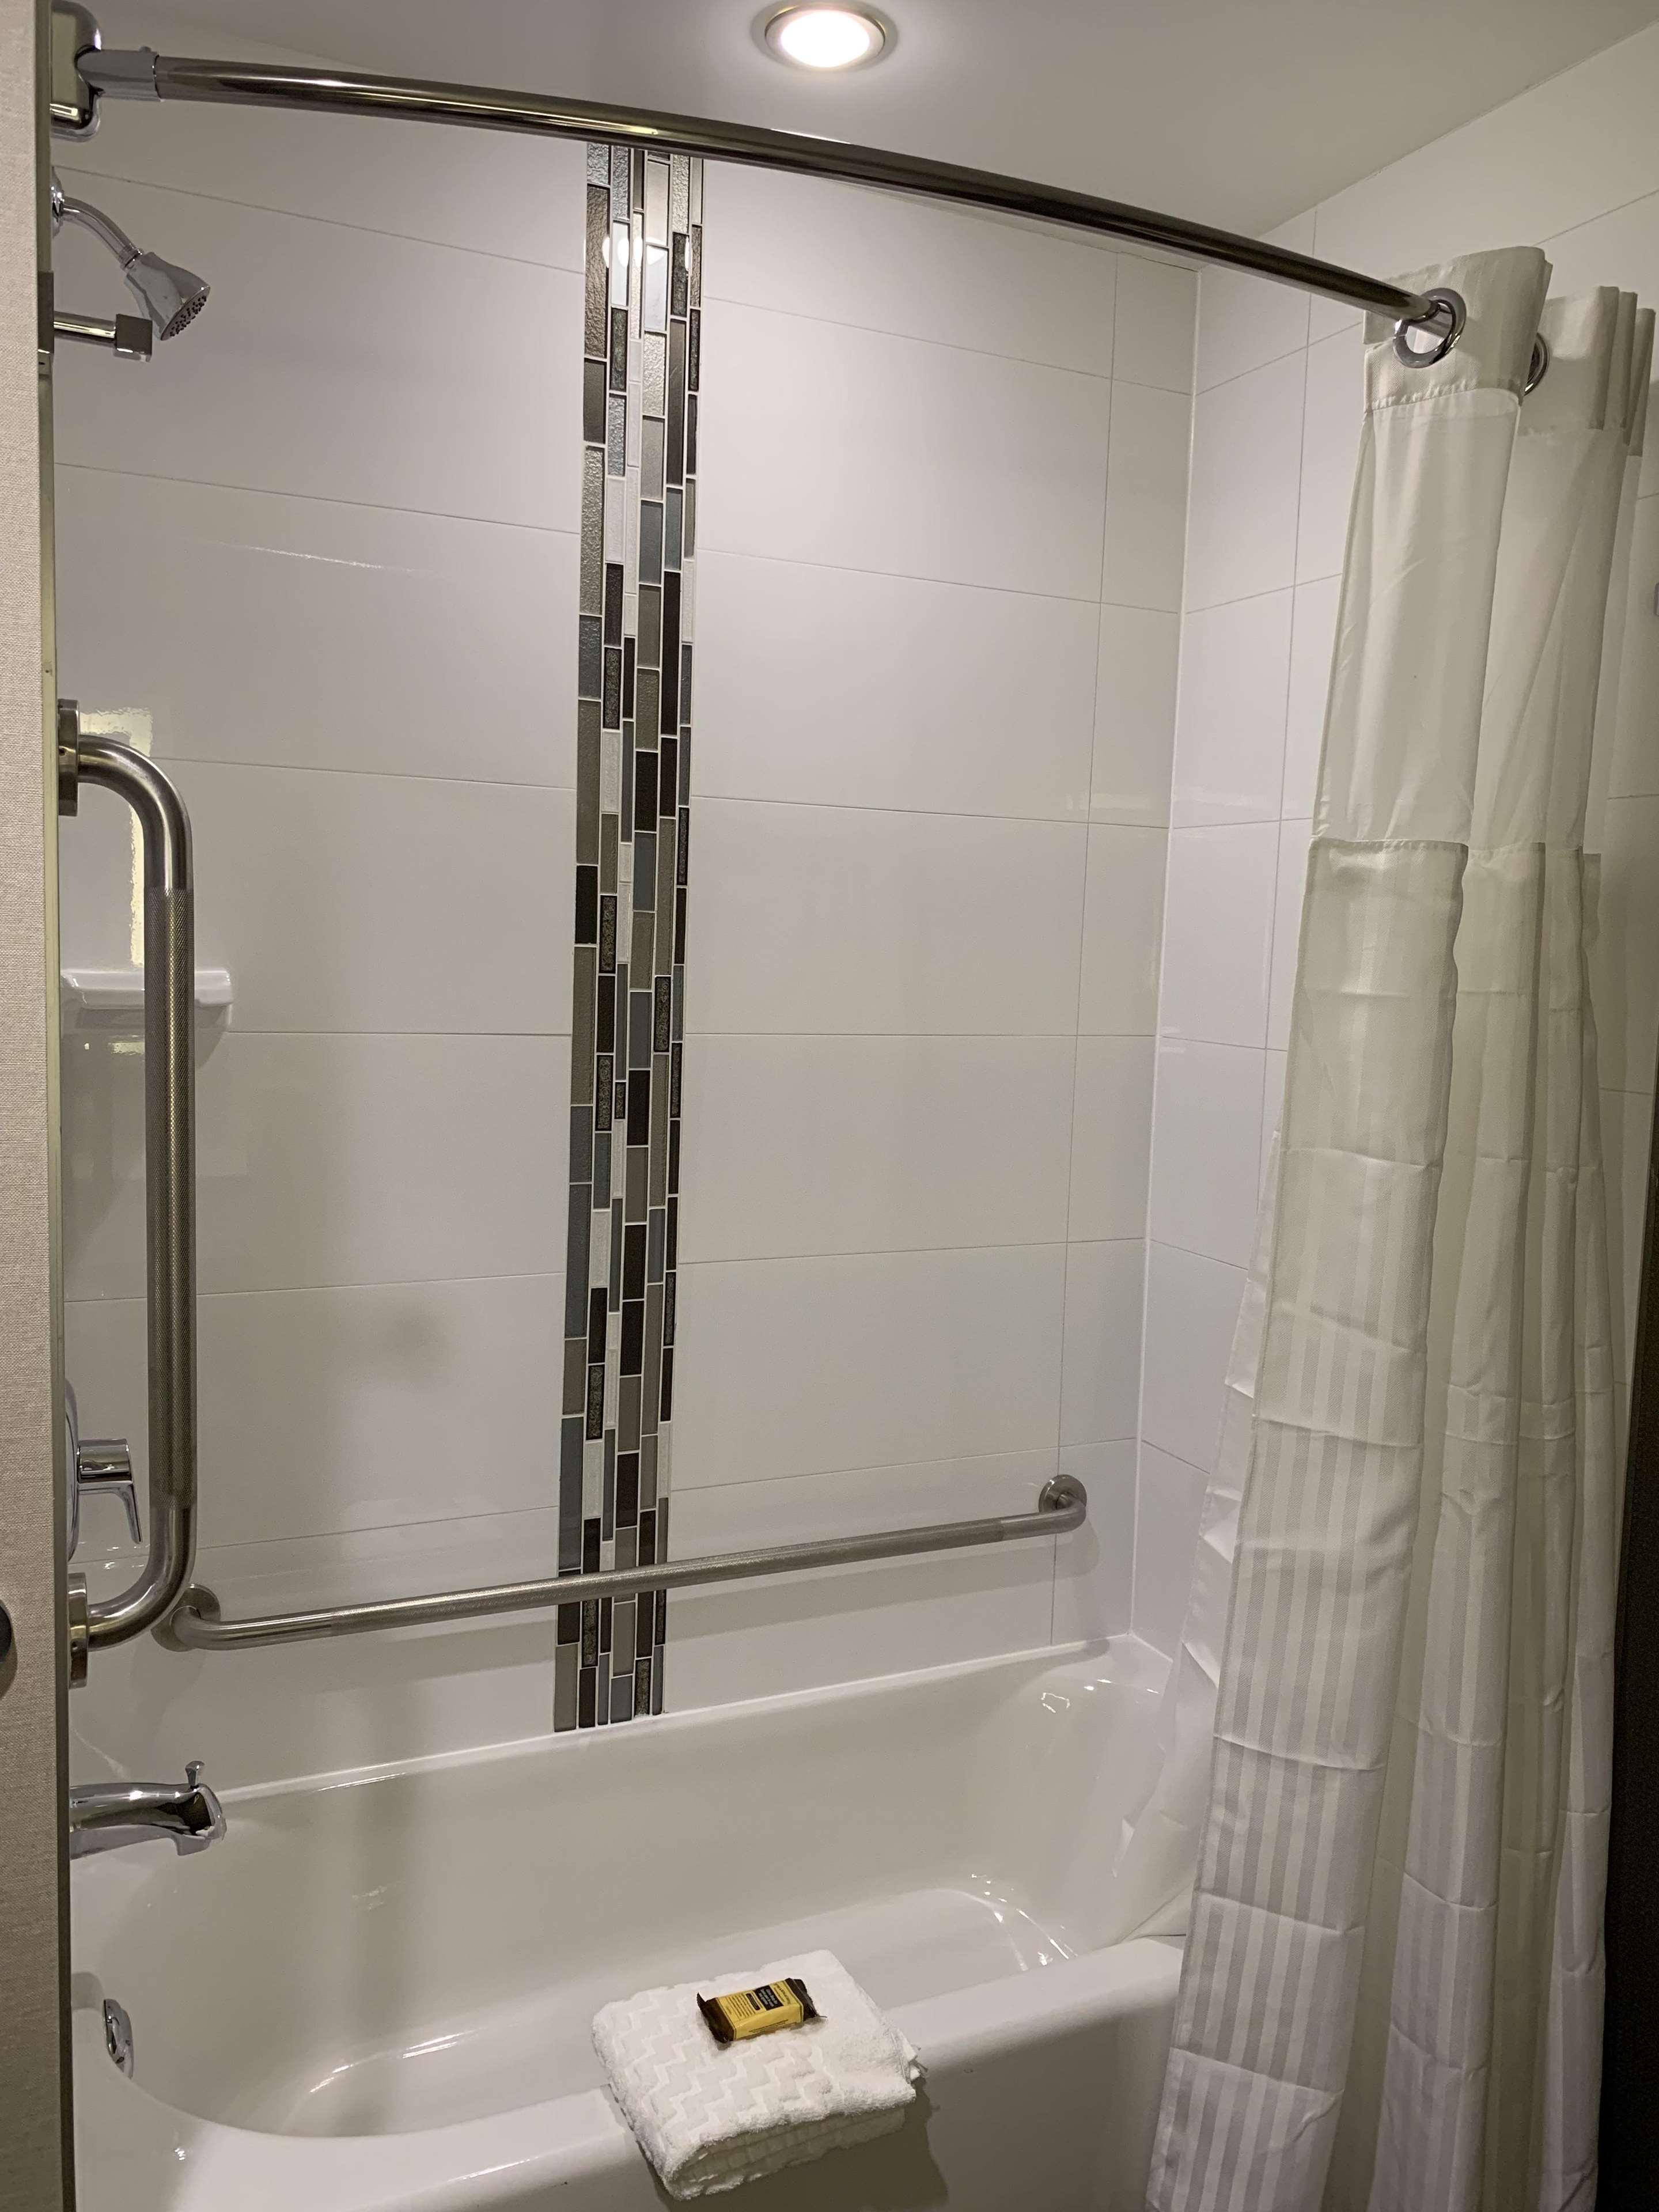 Accessible Room Bathroom Best Western Plus Hinton Inn & Suites Hinton (780)817-7000